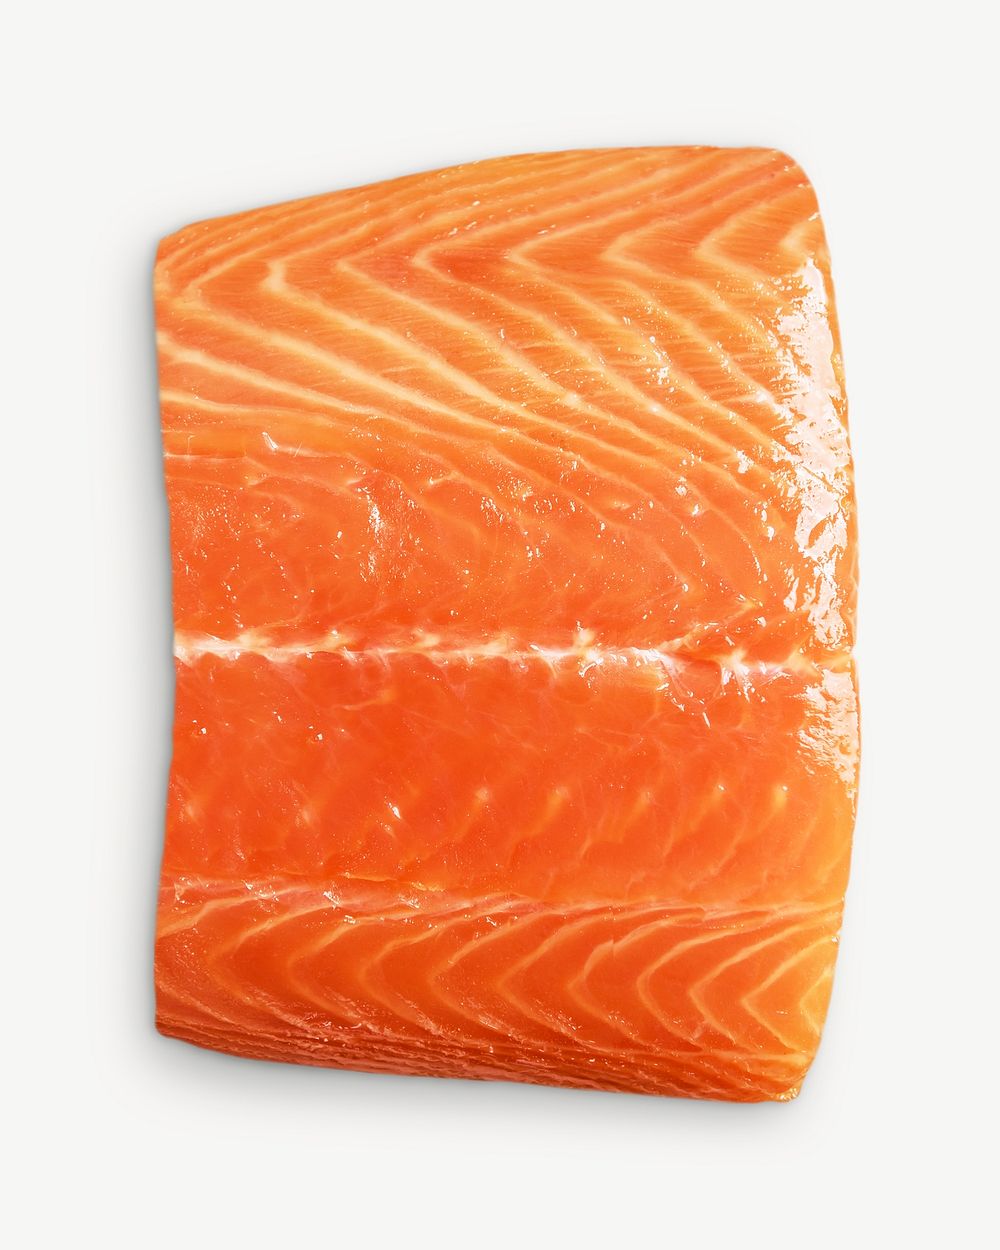 Raw salmon image graphic psd